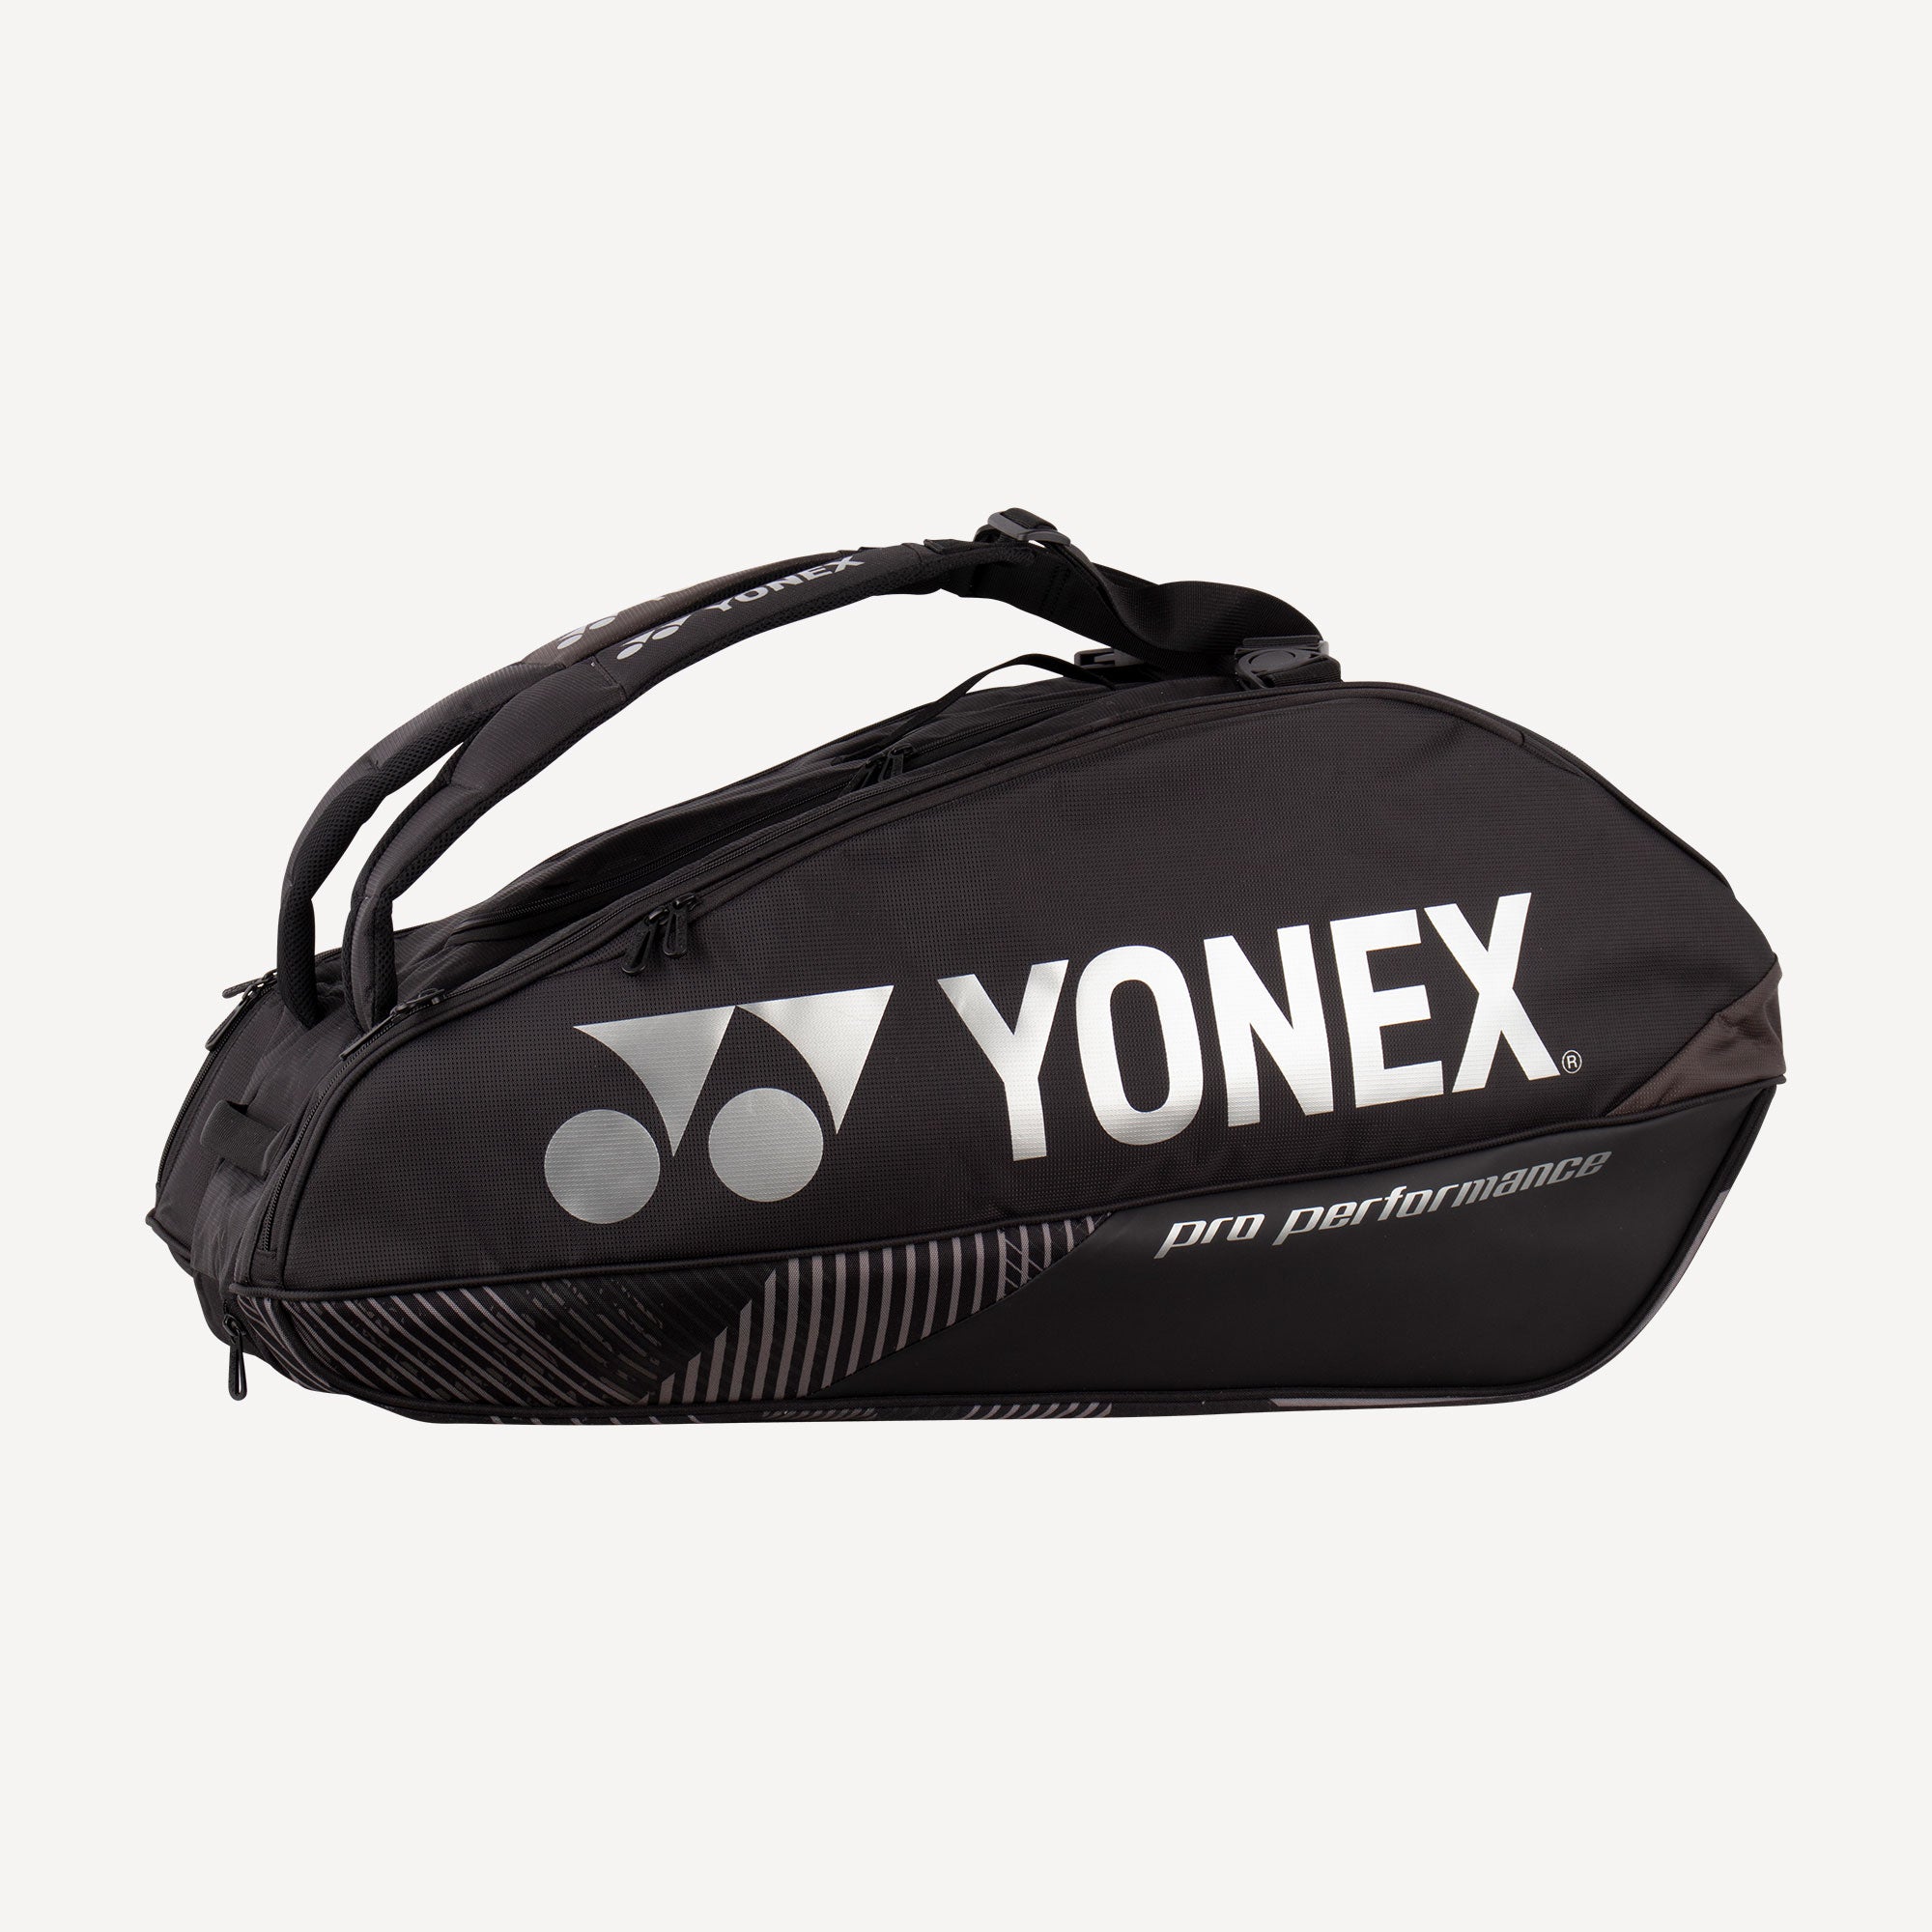 Yonex Pro 9 Racket Tennis Bag - Black (1)